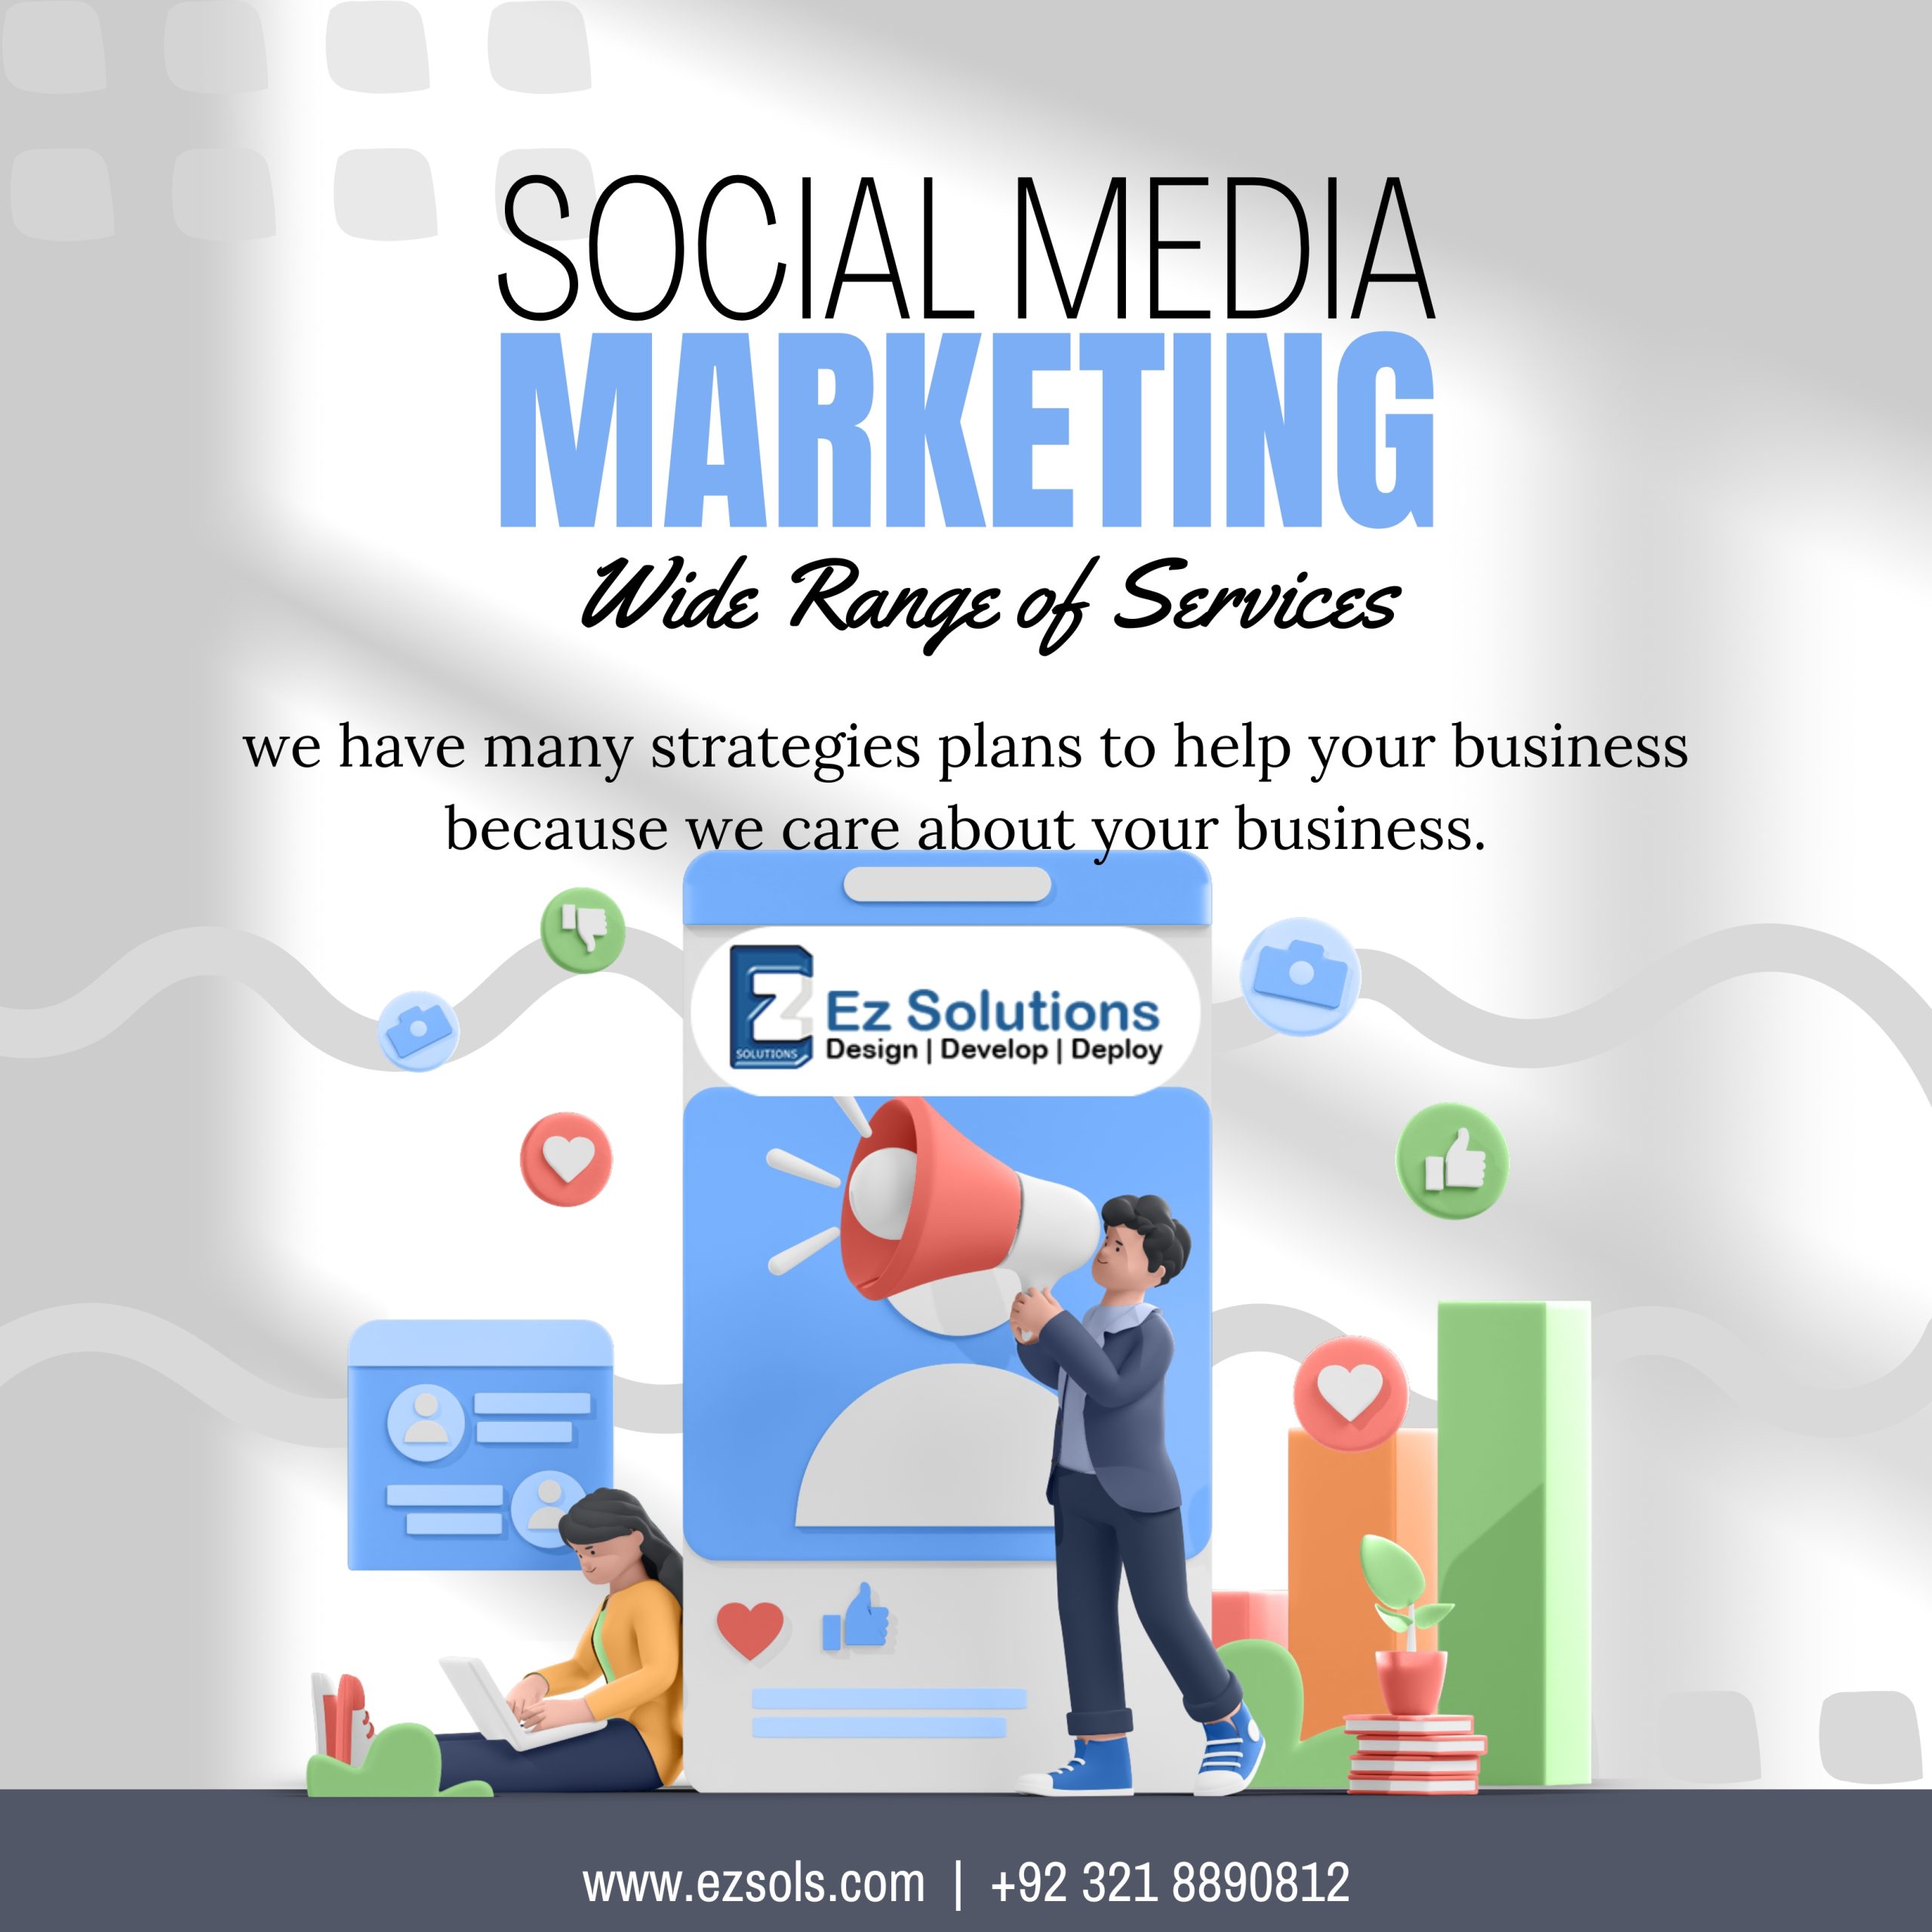 Social Media Marketing by Ez Solutions